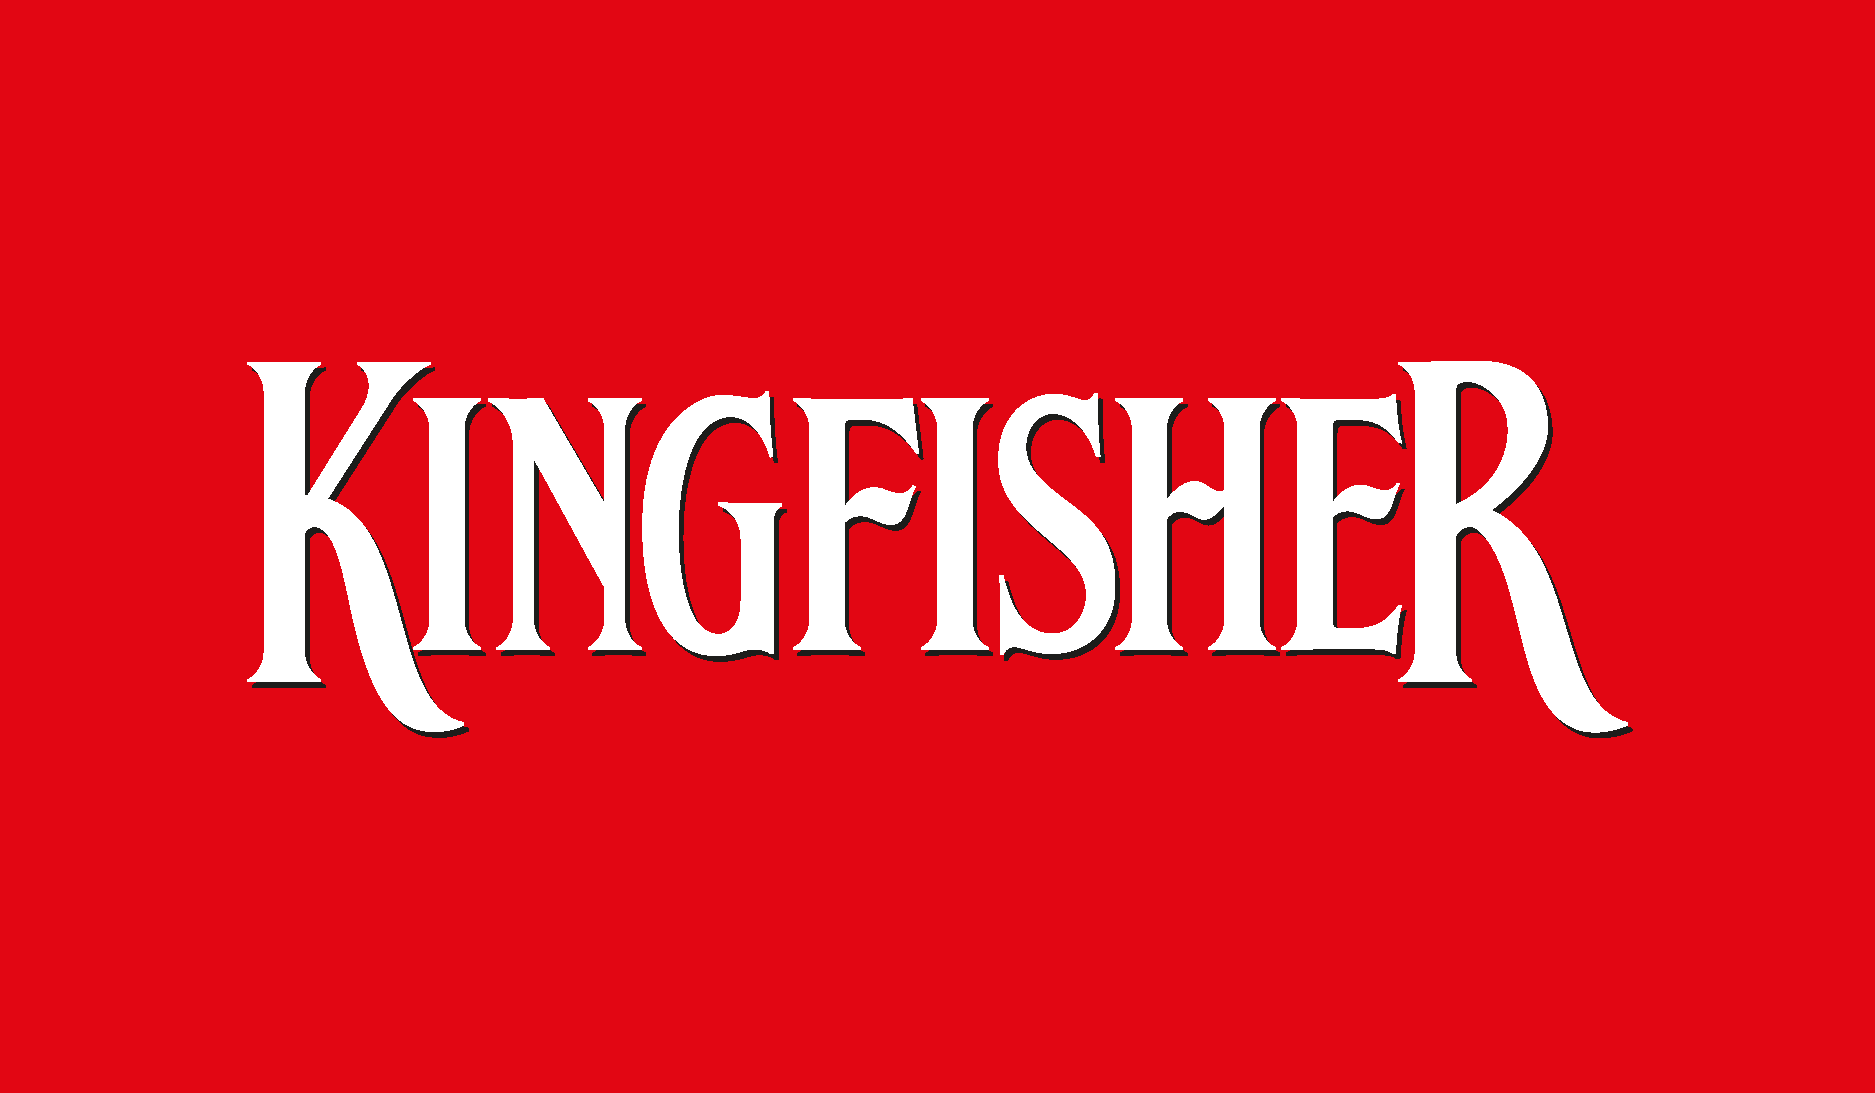 Kingfisher - Interbrand